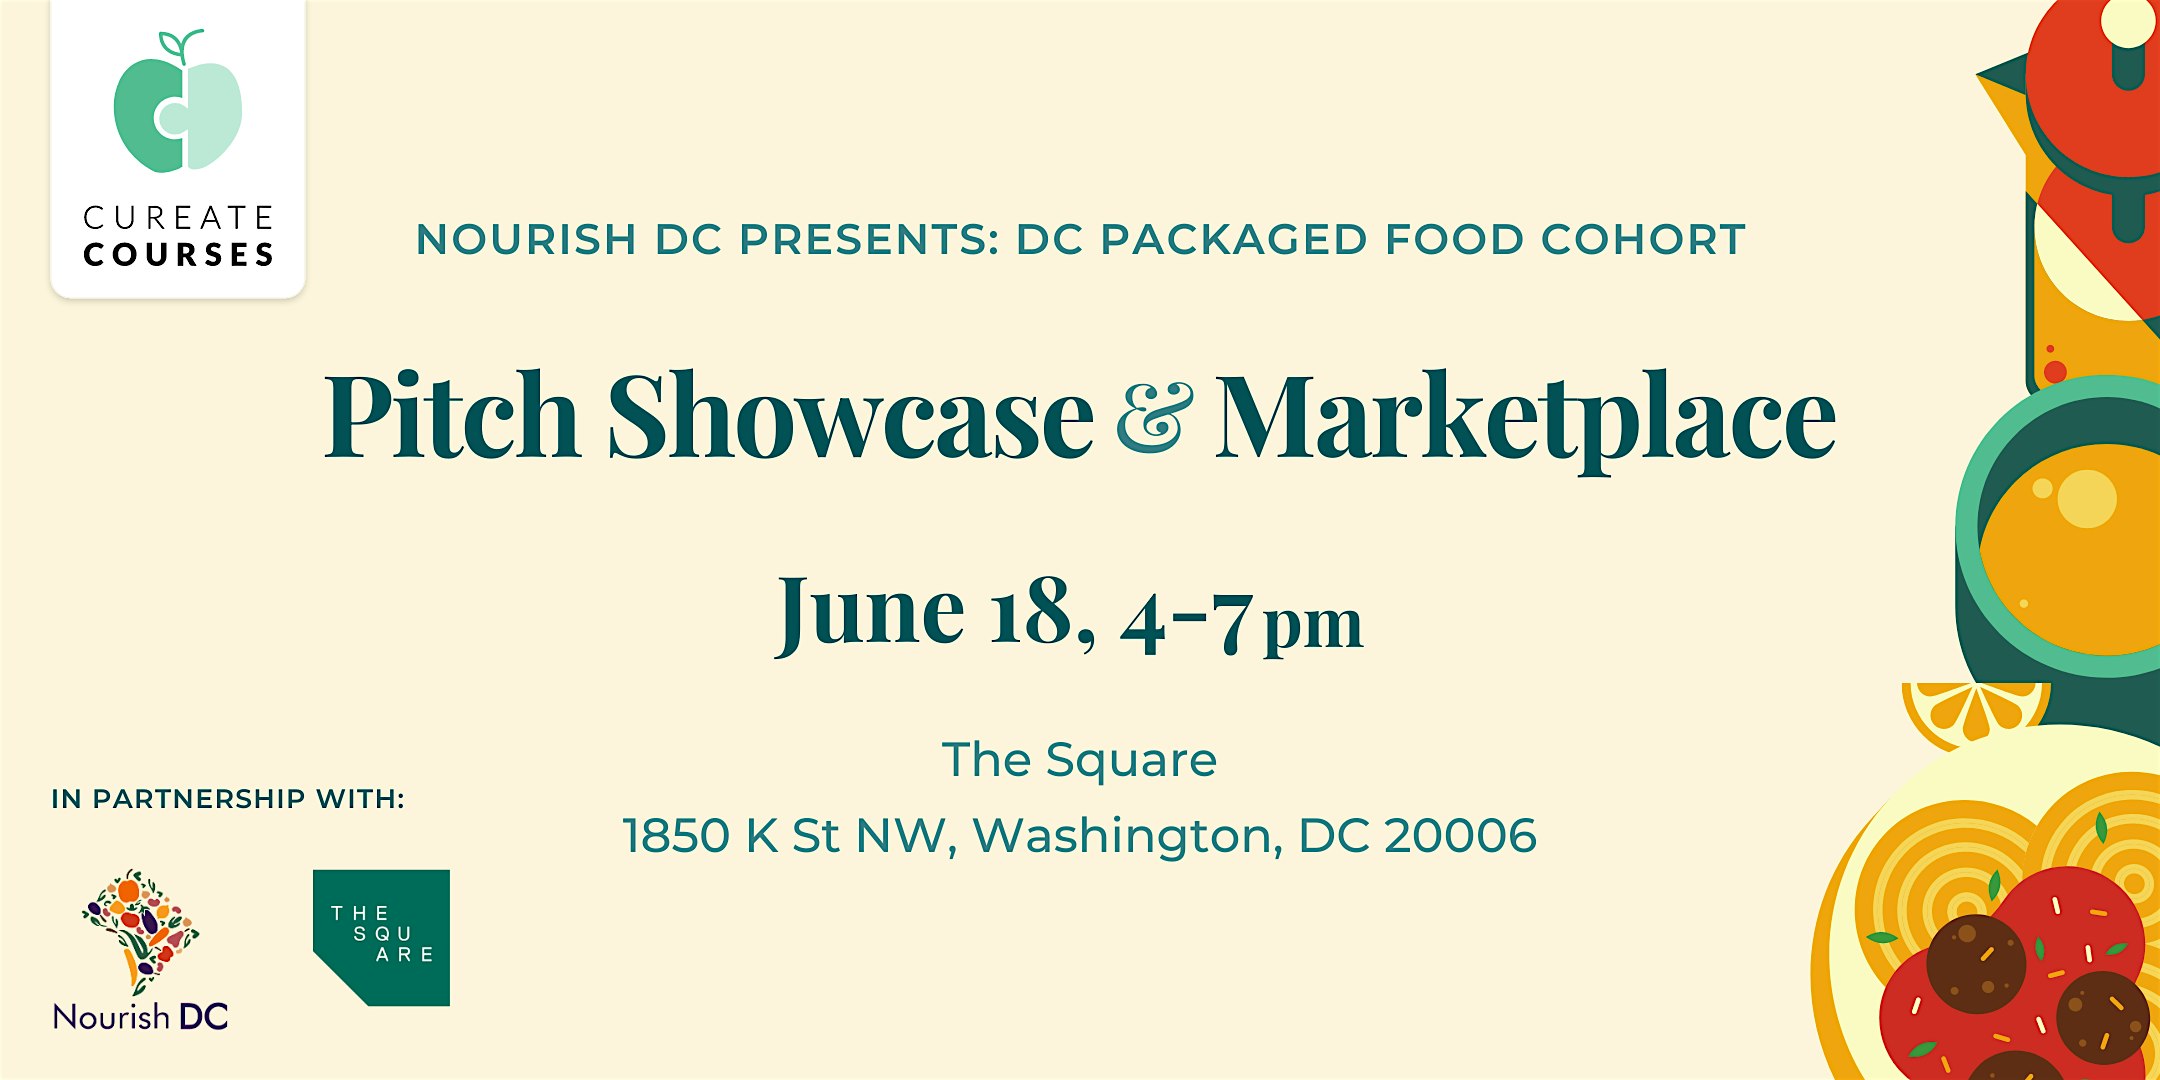 Nourish DC Presents: DC Packaged Food Cohort - Pitch Showcase & Marketplace